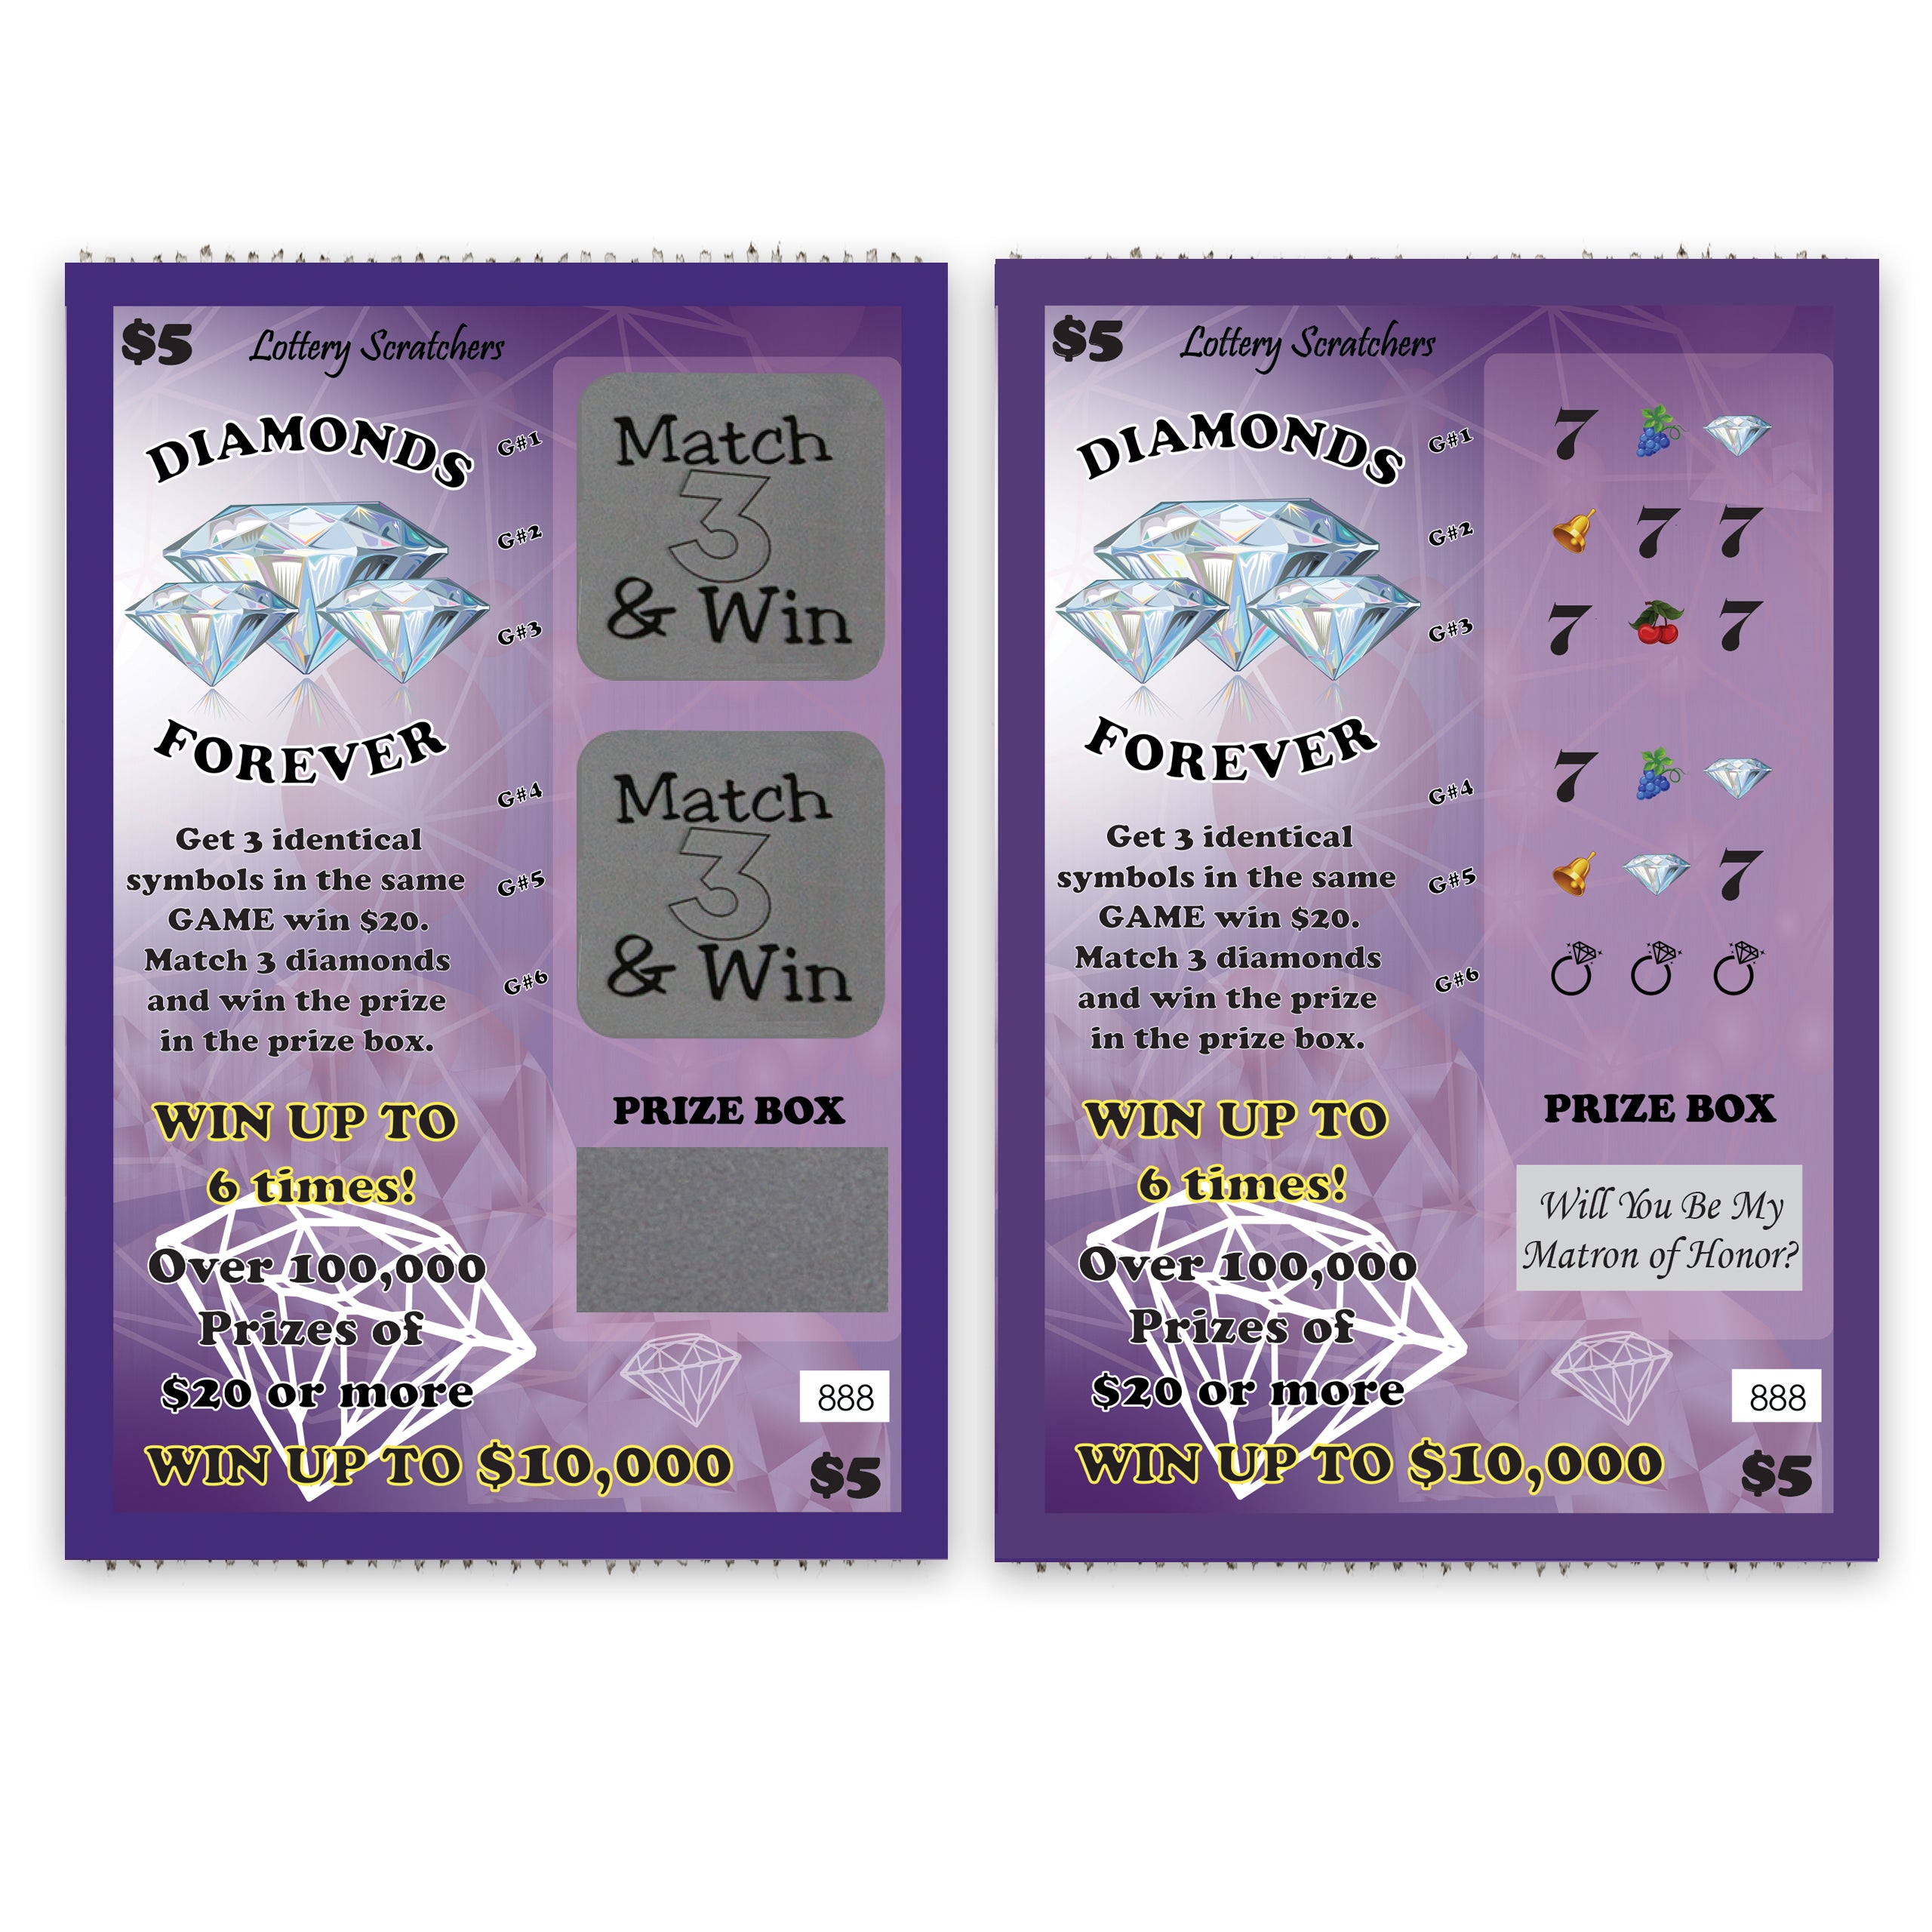 Will You Be My Matron of Honor? Lotto Replica Scratch Off Card 4" x 6" - Purple - My Scratch Offs